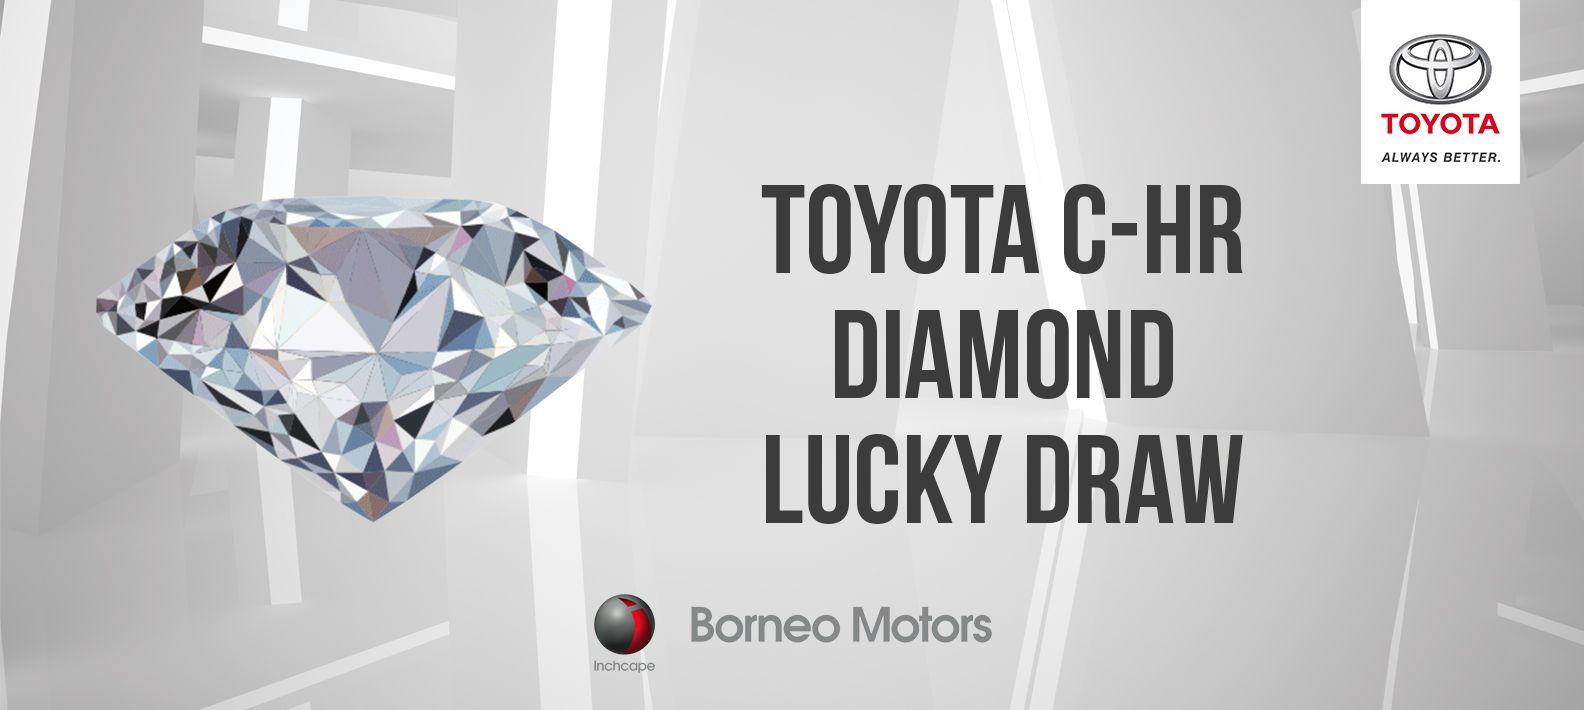 Diamond Toyota Logo - Toyota C-HR Diamond Lucky Draw | Borneo Motors